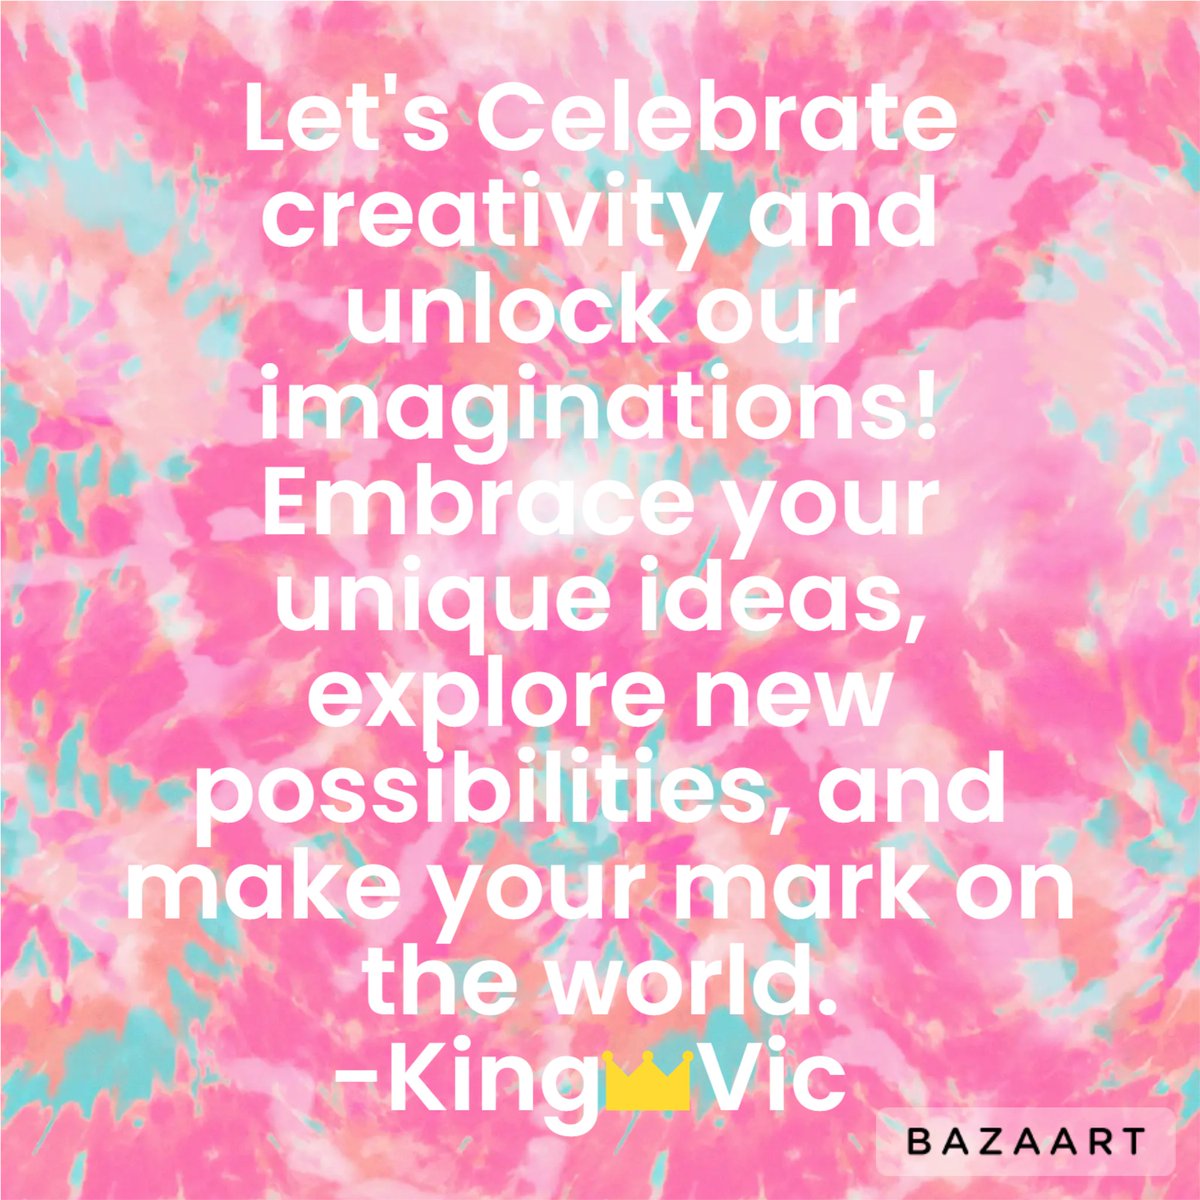 #KingVicQuotes #CreativityUnleashed #inspireinnovation #ArtisticExpression #ThinkOutsideTheBox #CreativeCommunity #EmbraceImagination #UnlockPotential #MakeItYourOwn #CreativeJourney #RepostWednesday